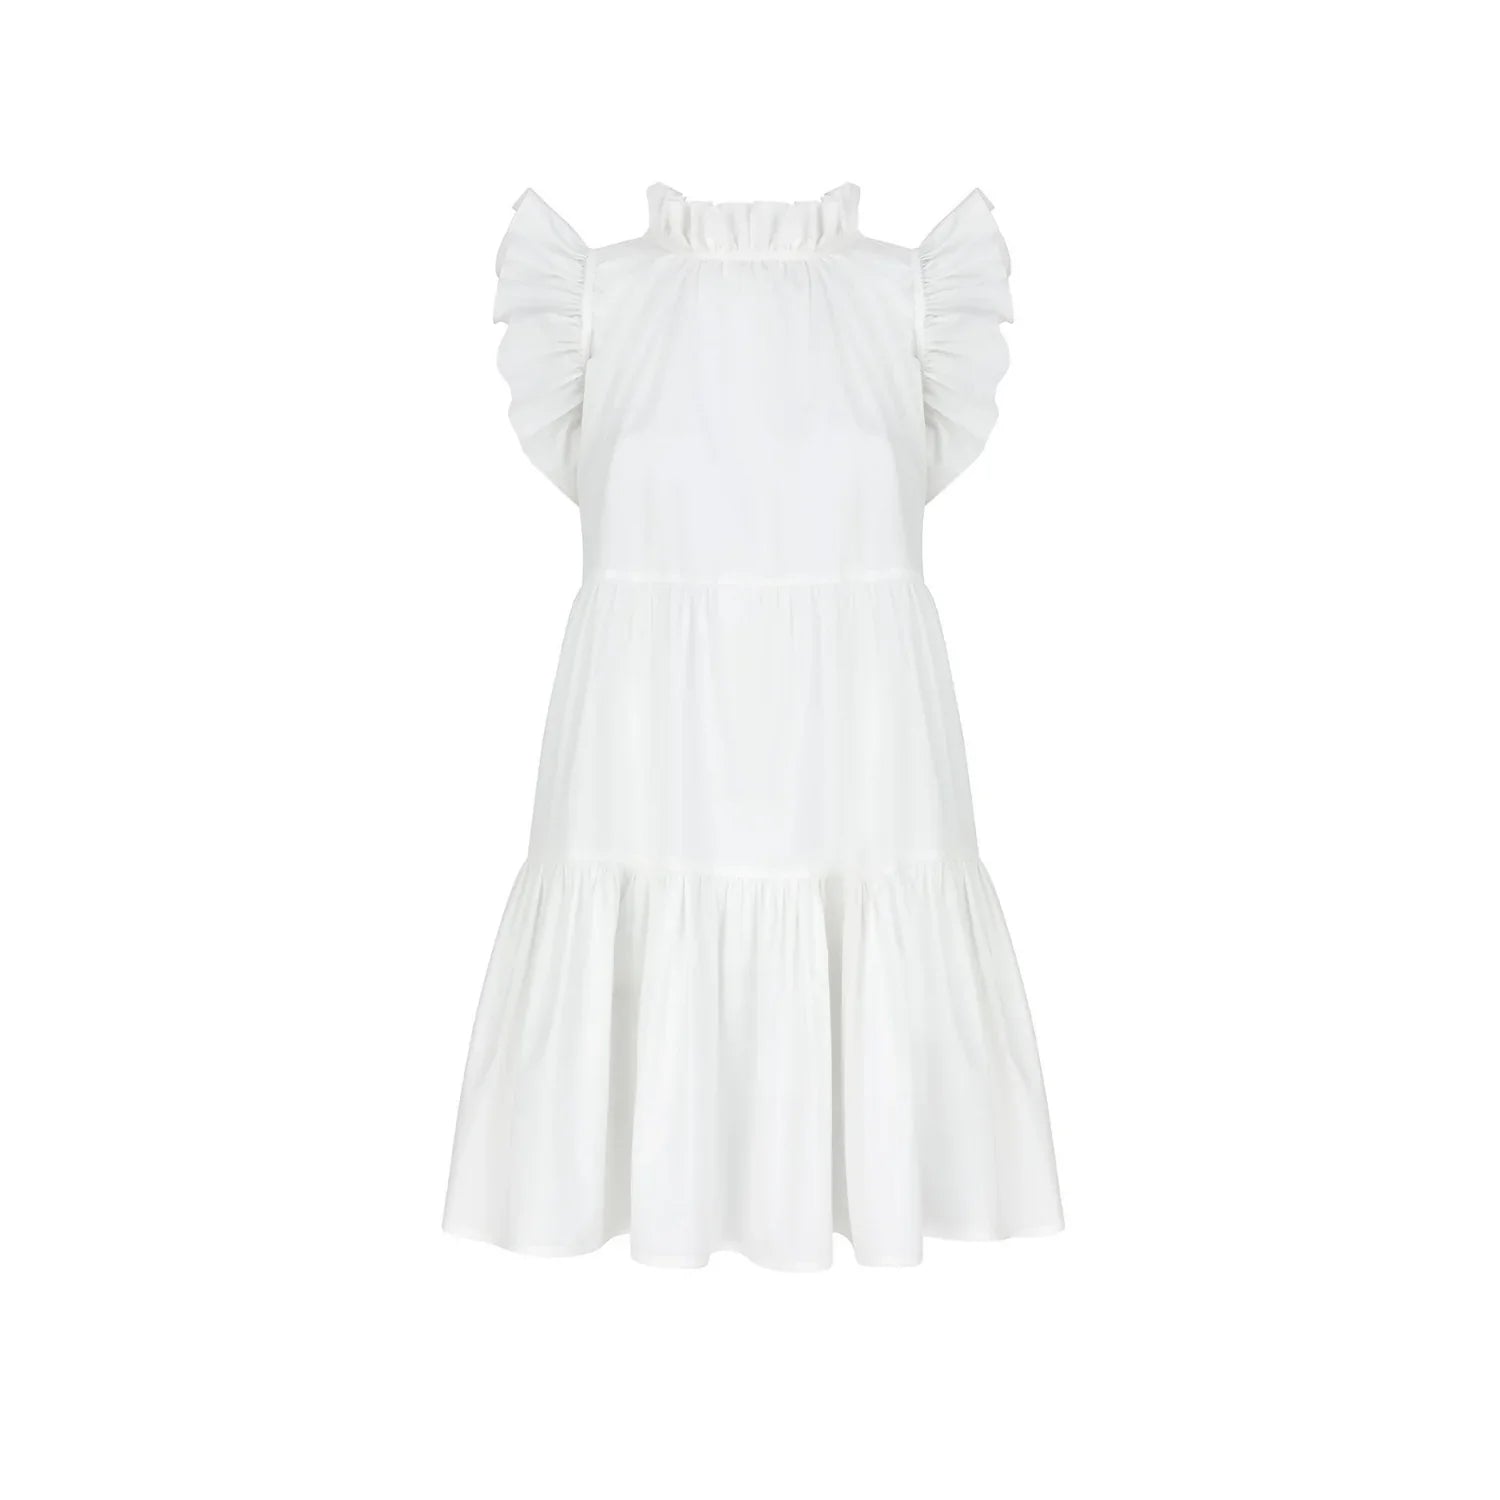 Luna Dress White by Monica Nera